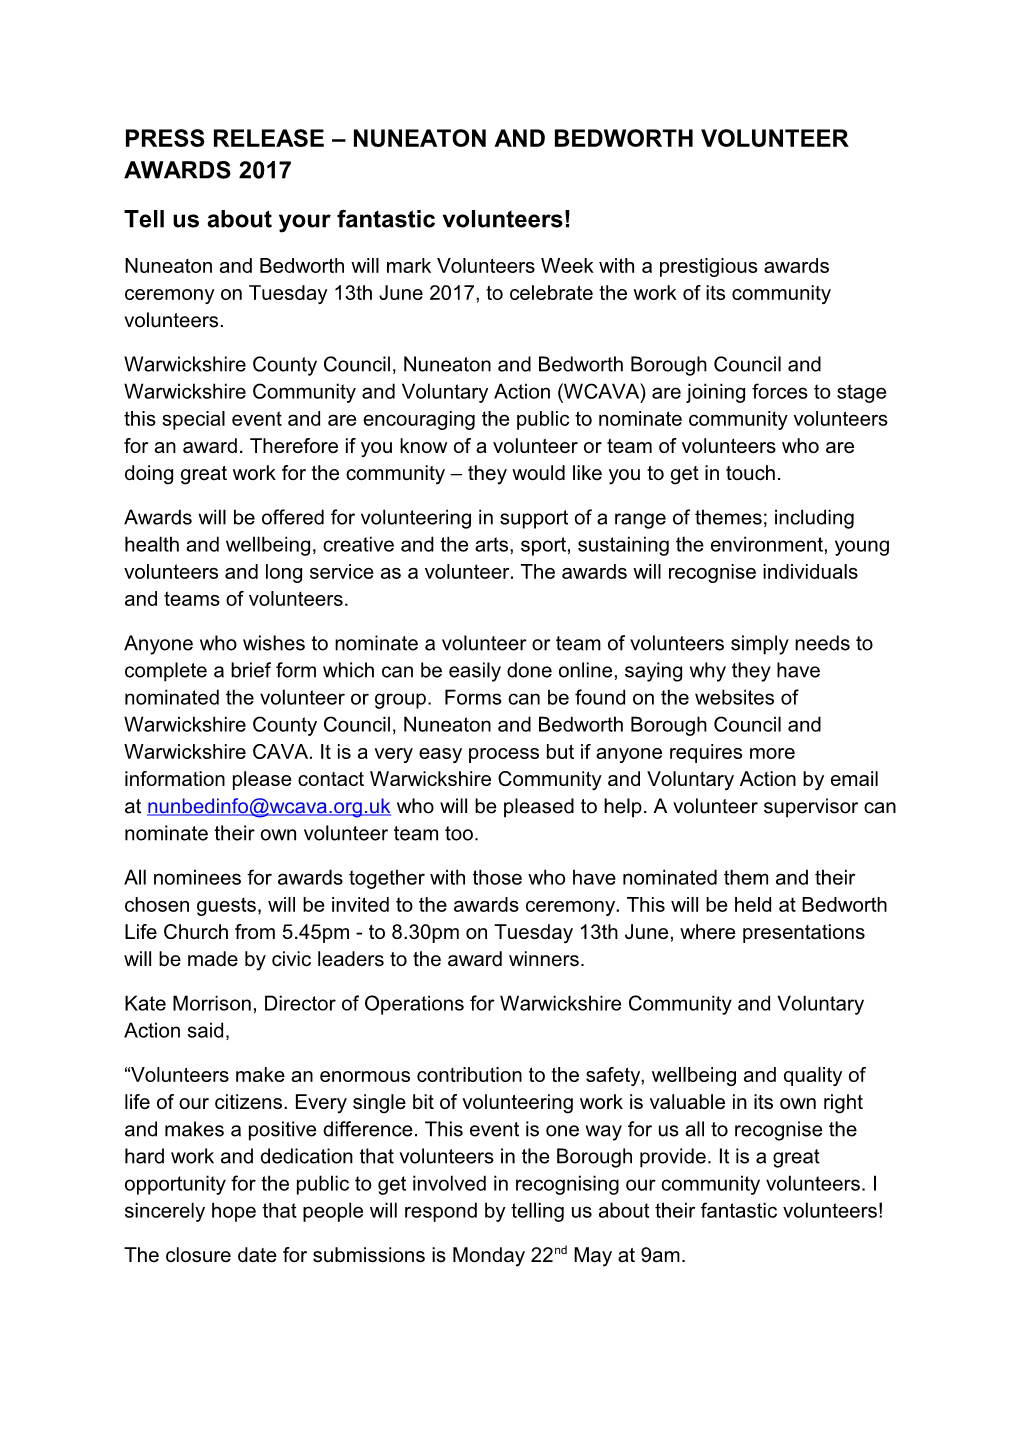 Press Release Nuneaton and Bedworth Volunteer Awards 2017